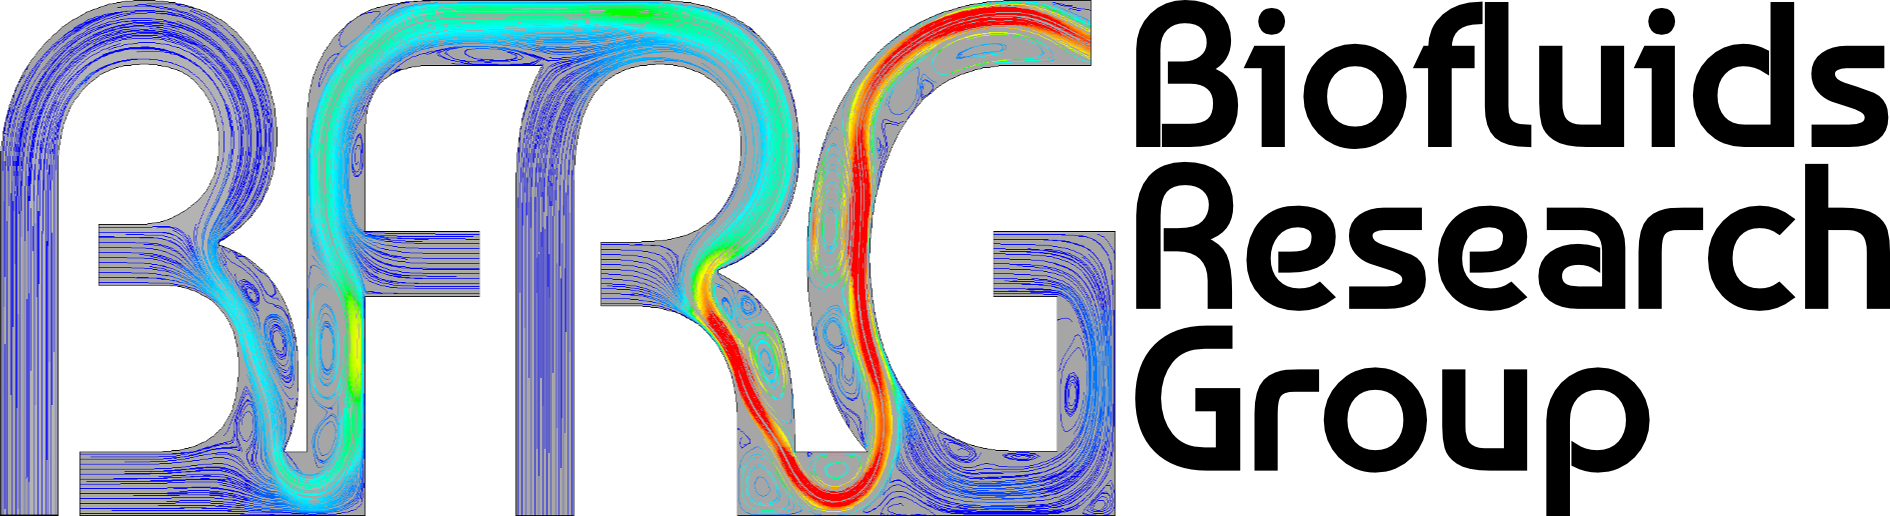 BFRG logo